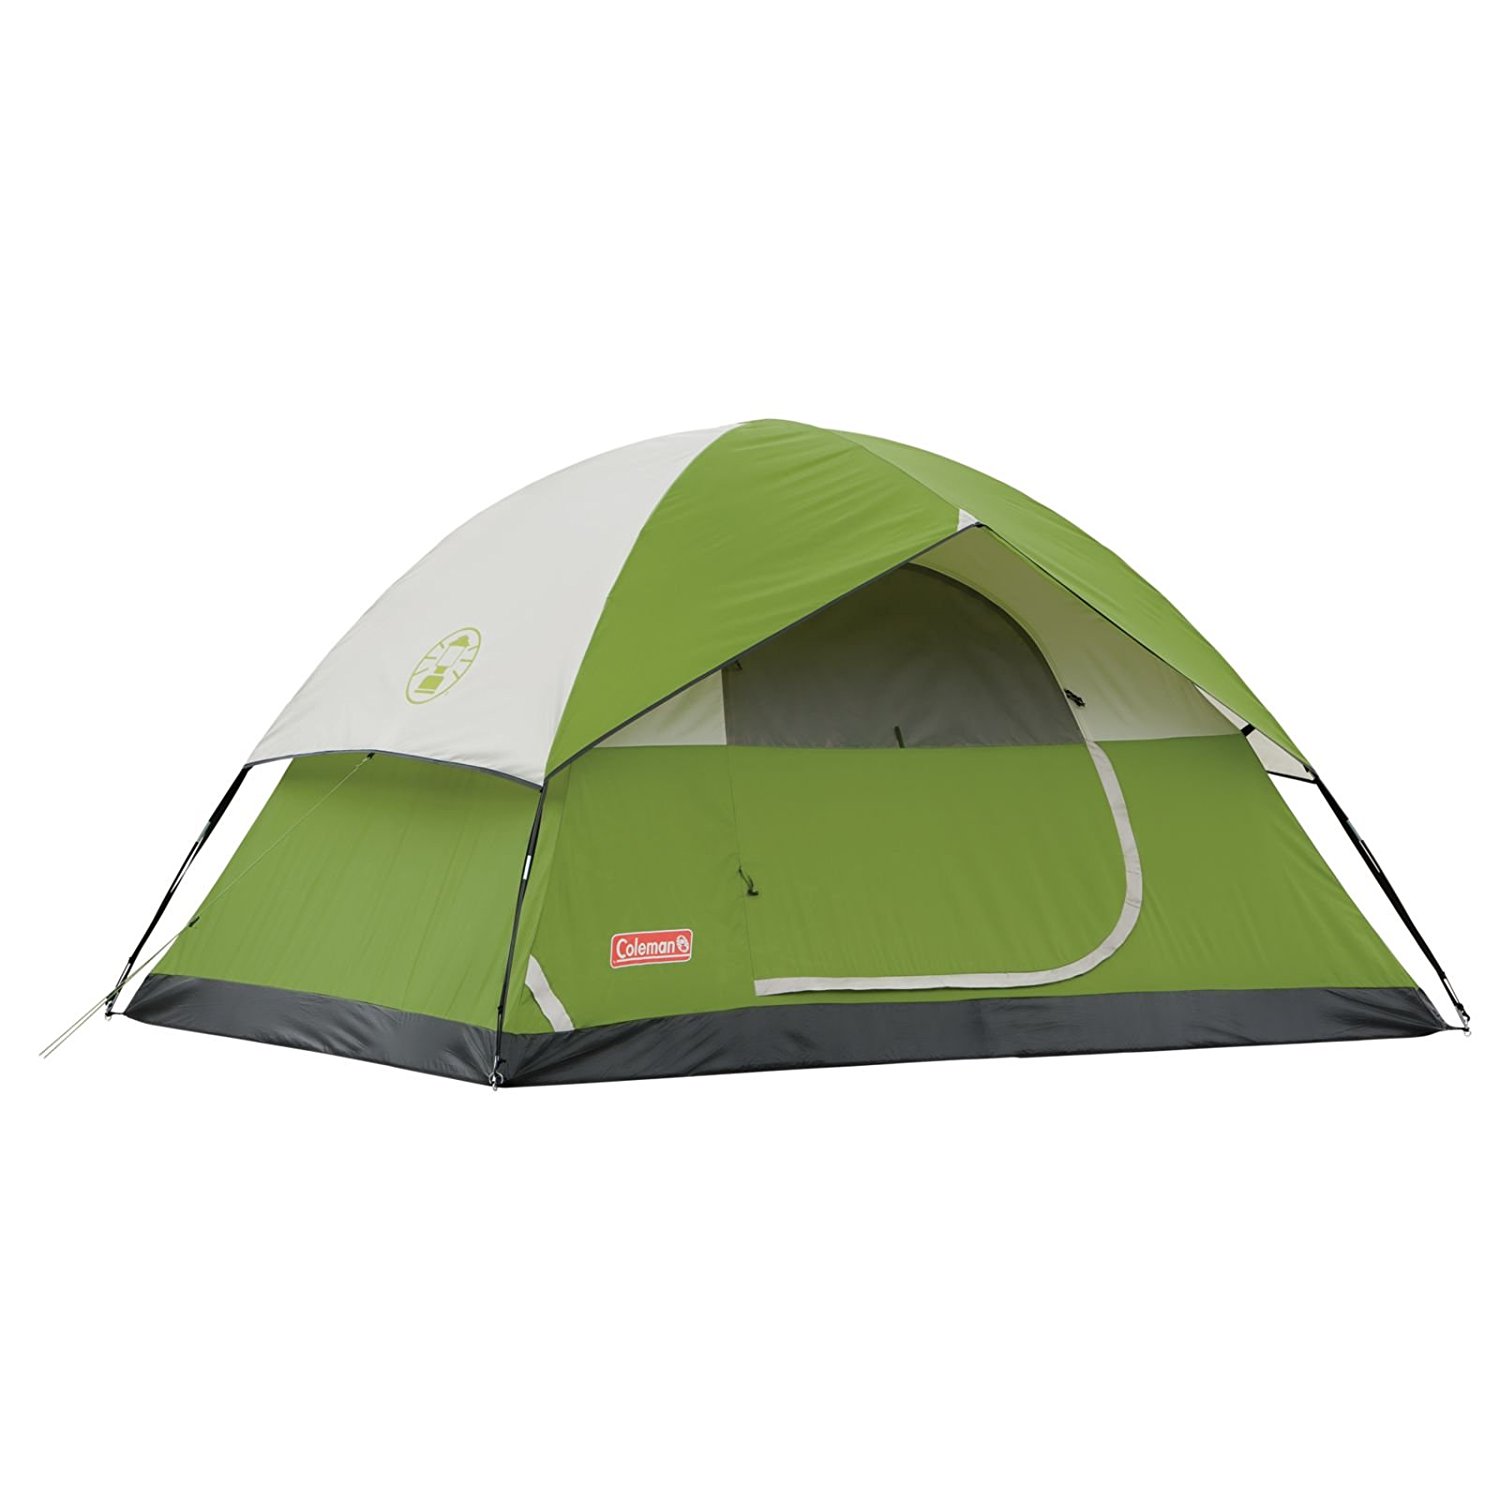 Coleman Sundome 4 Person Tent – Just $39.00!